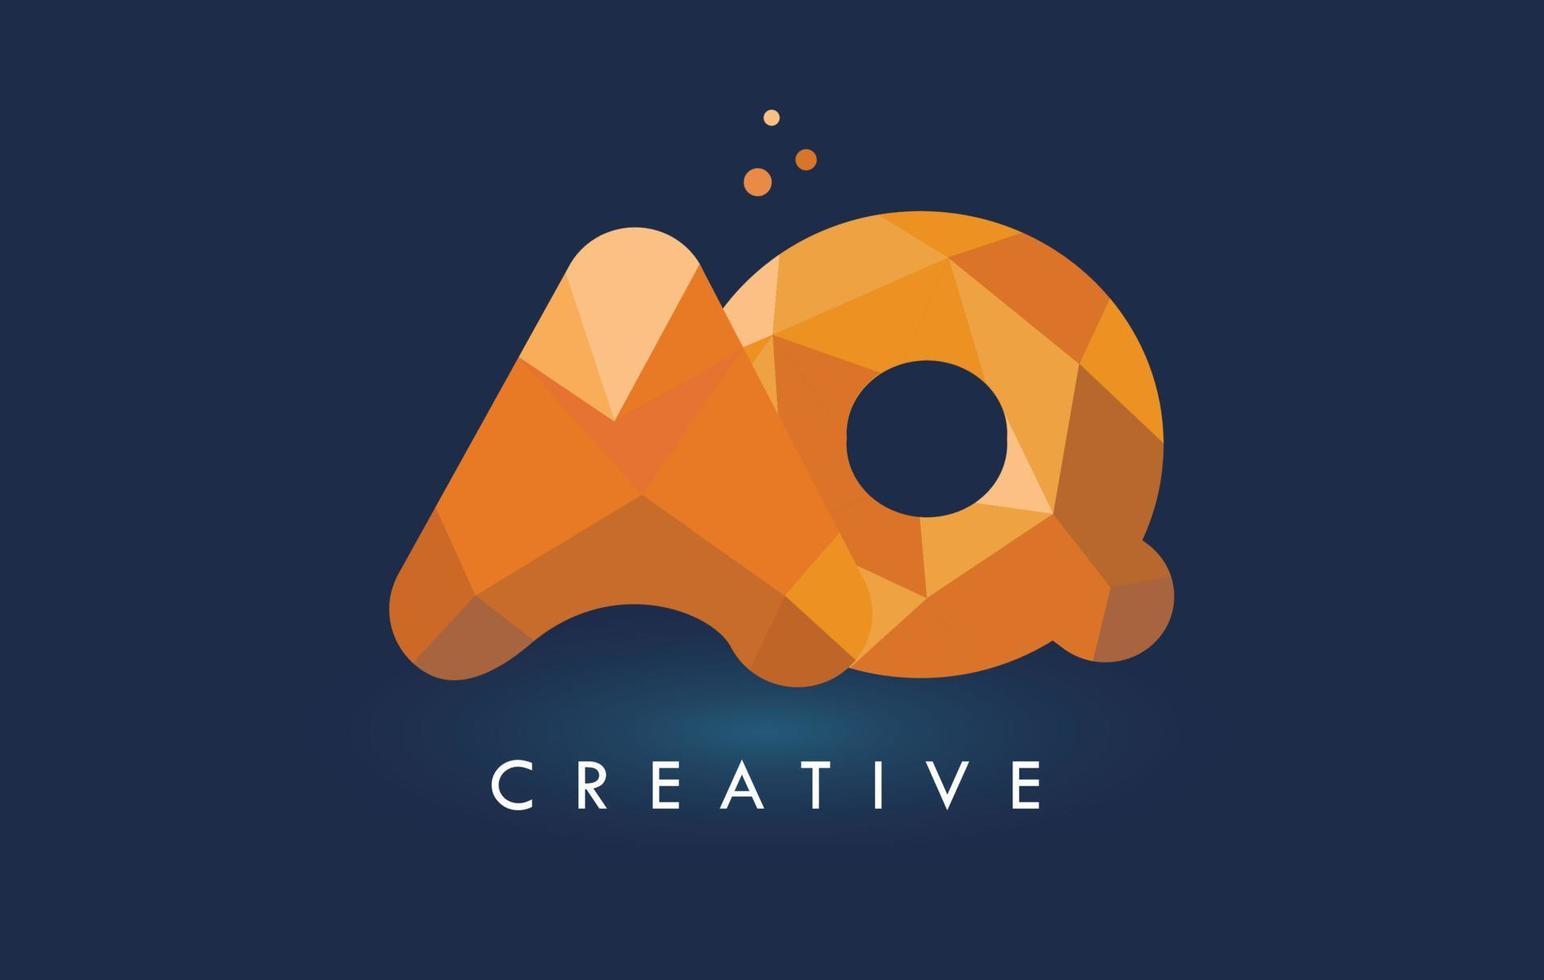 aq-Buchstabe mit Origami-Dreieck-Logo. kreatives gelb-oranges Origami-Design. vektor